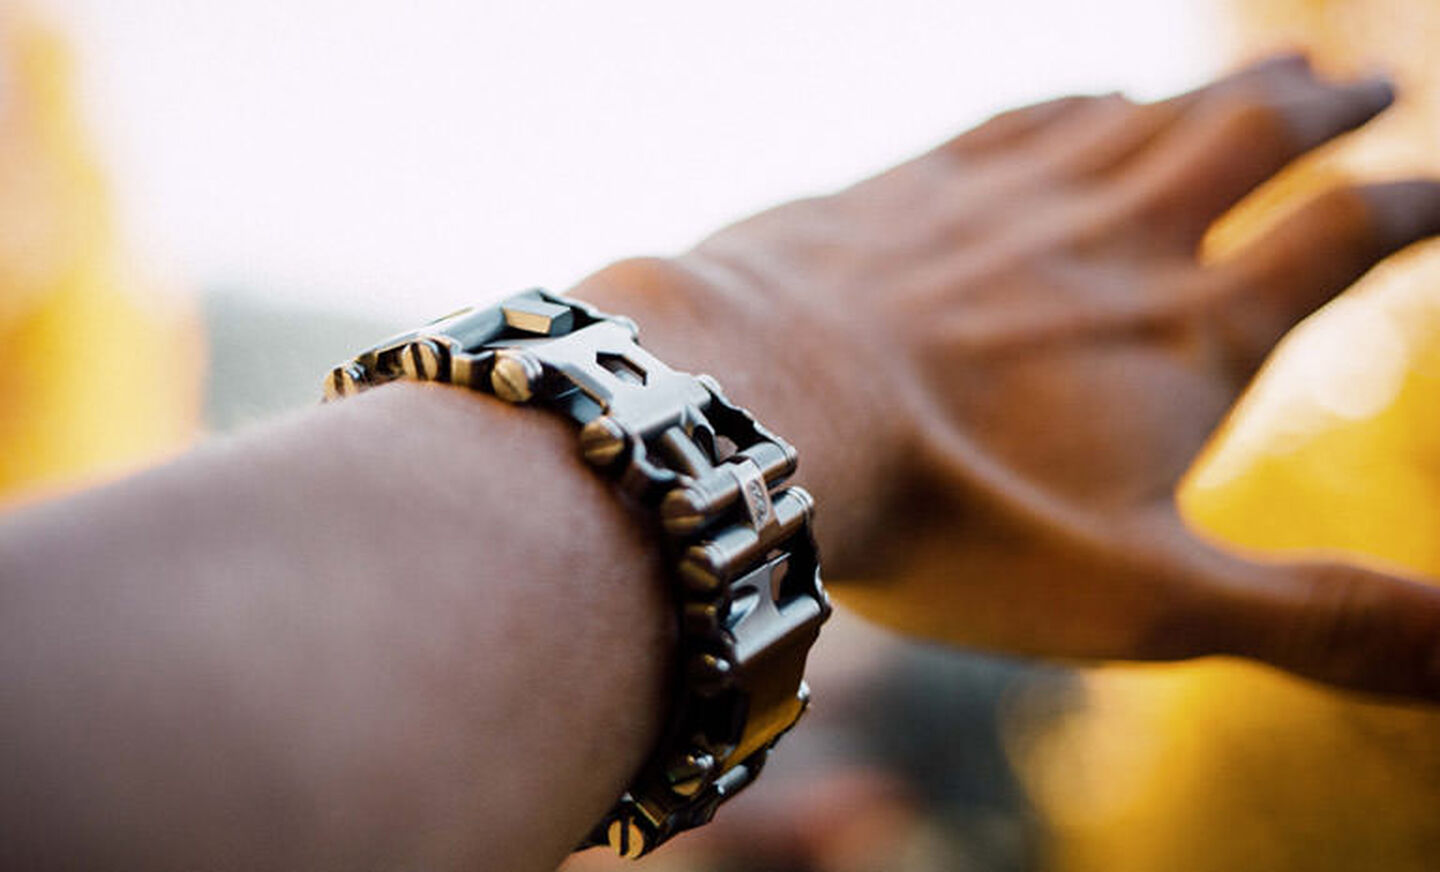 Leatherman tread multi-tool bracelet in stainless steel on wrist